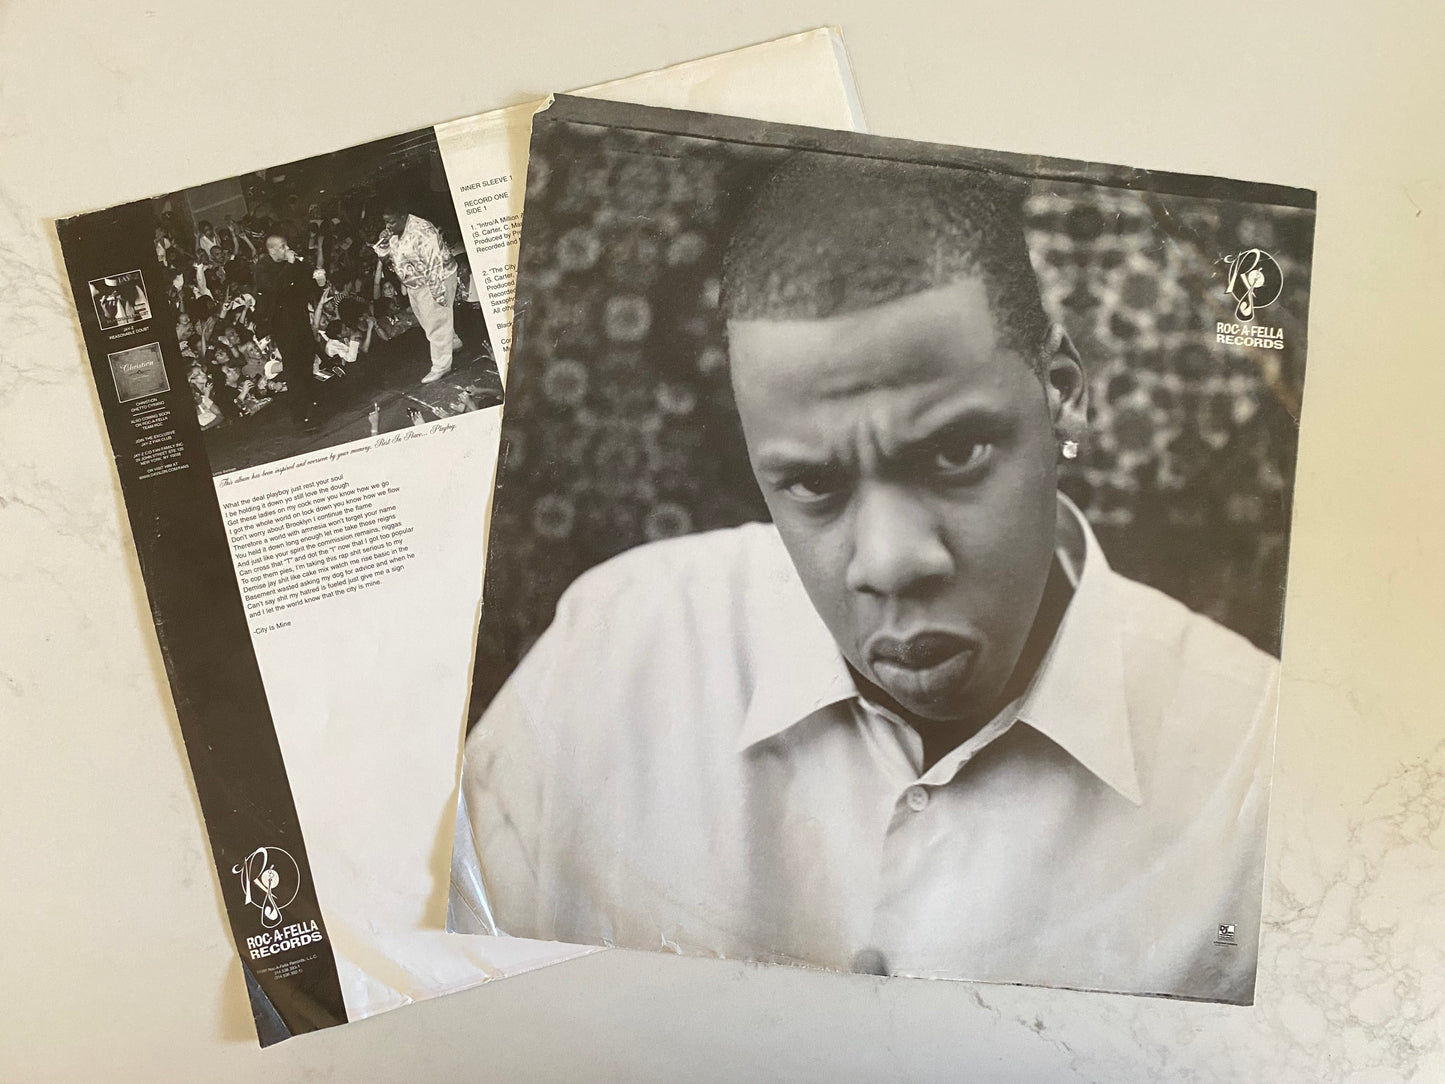 Jay-Z - In My Lifetime, Vol. 1 (2xLP, Album). HIP-HOP